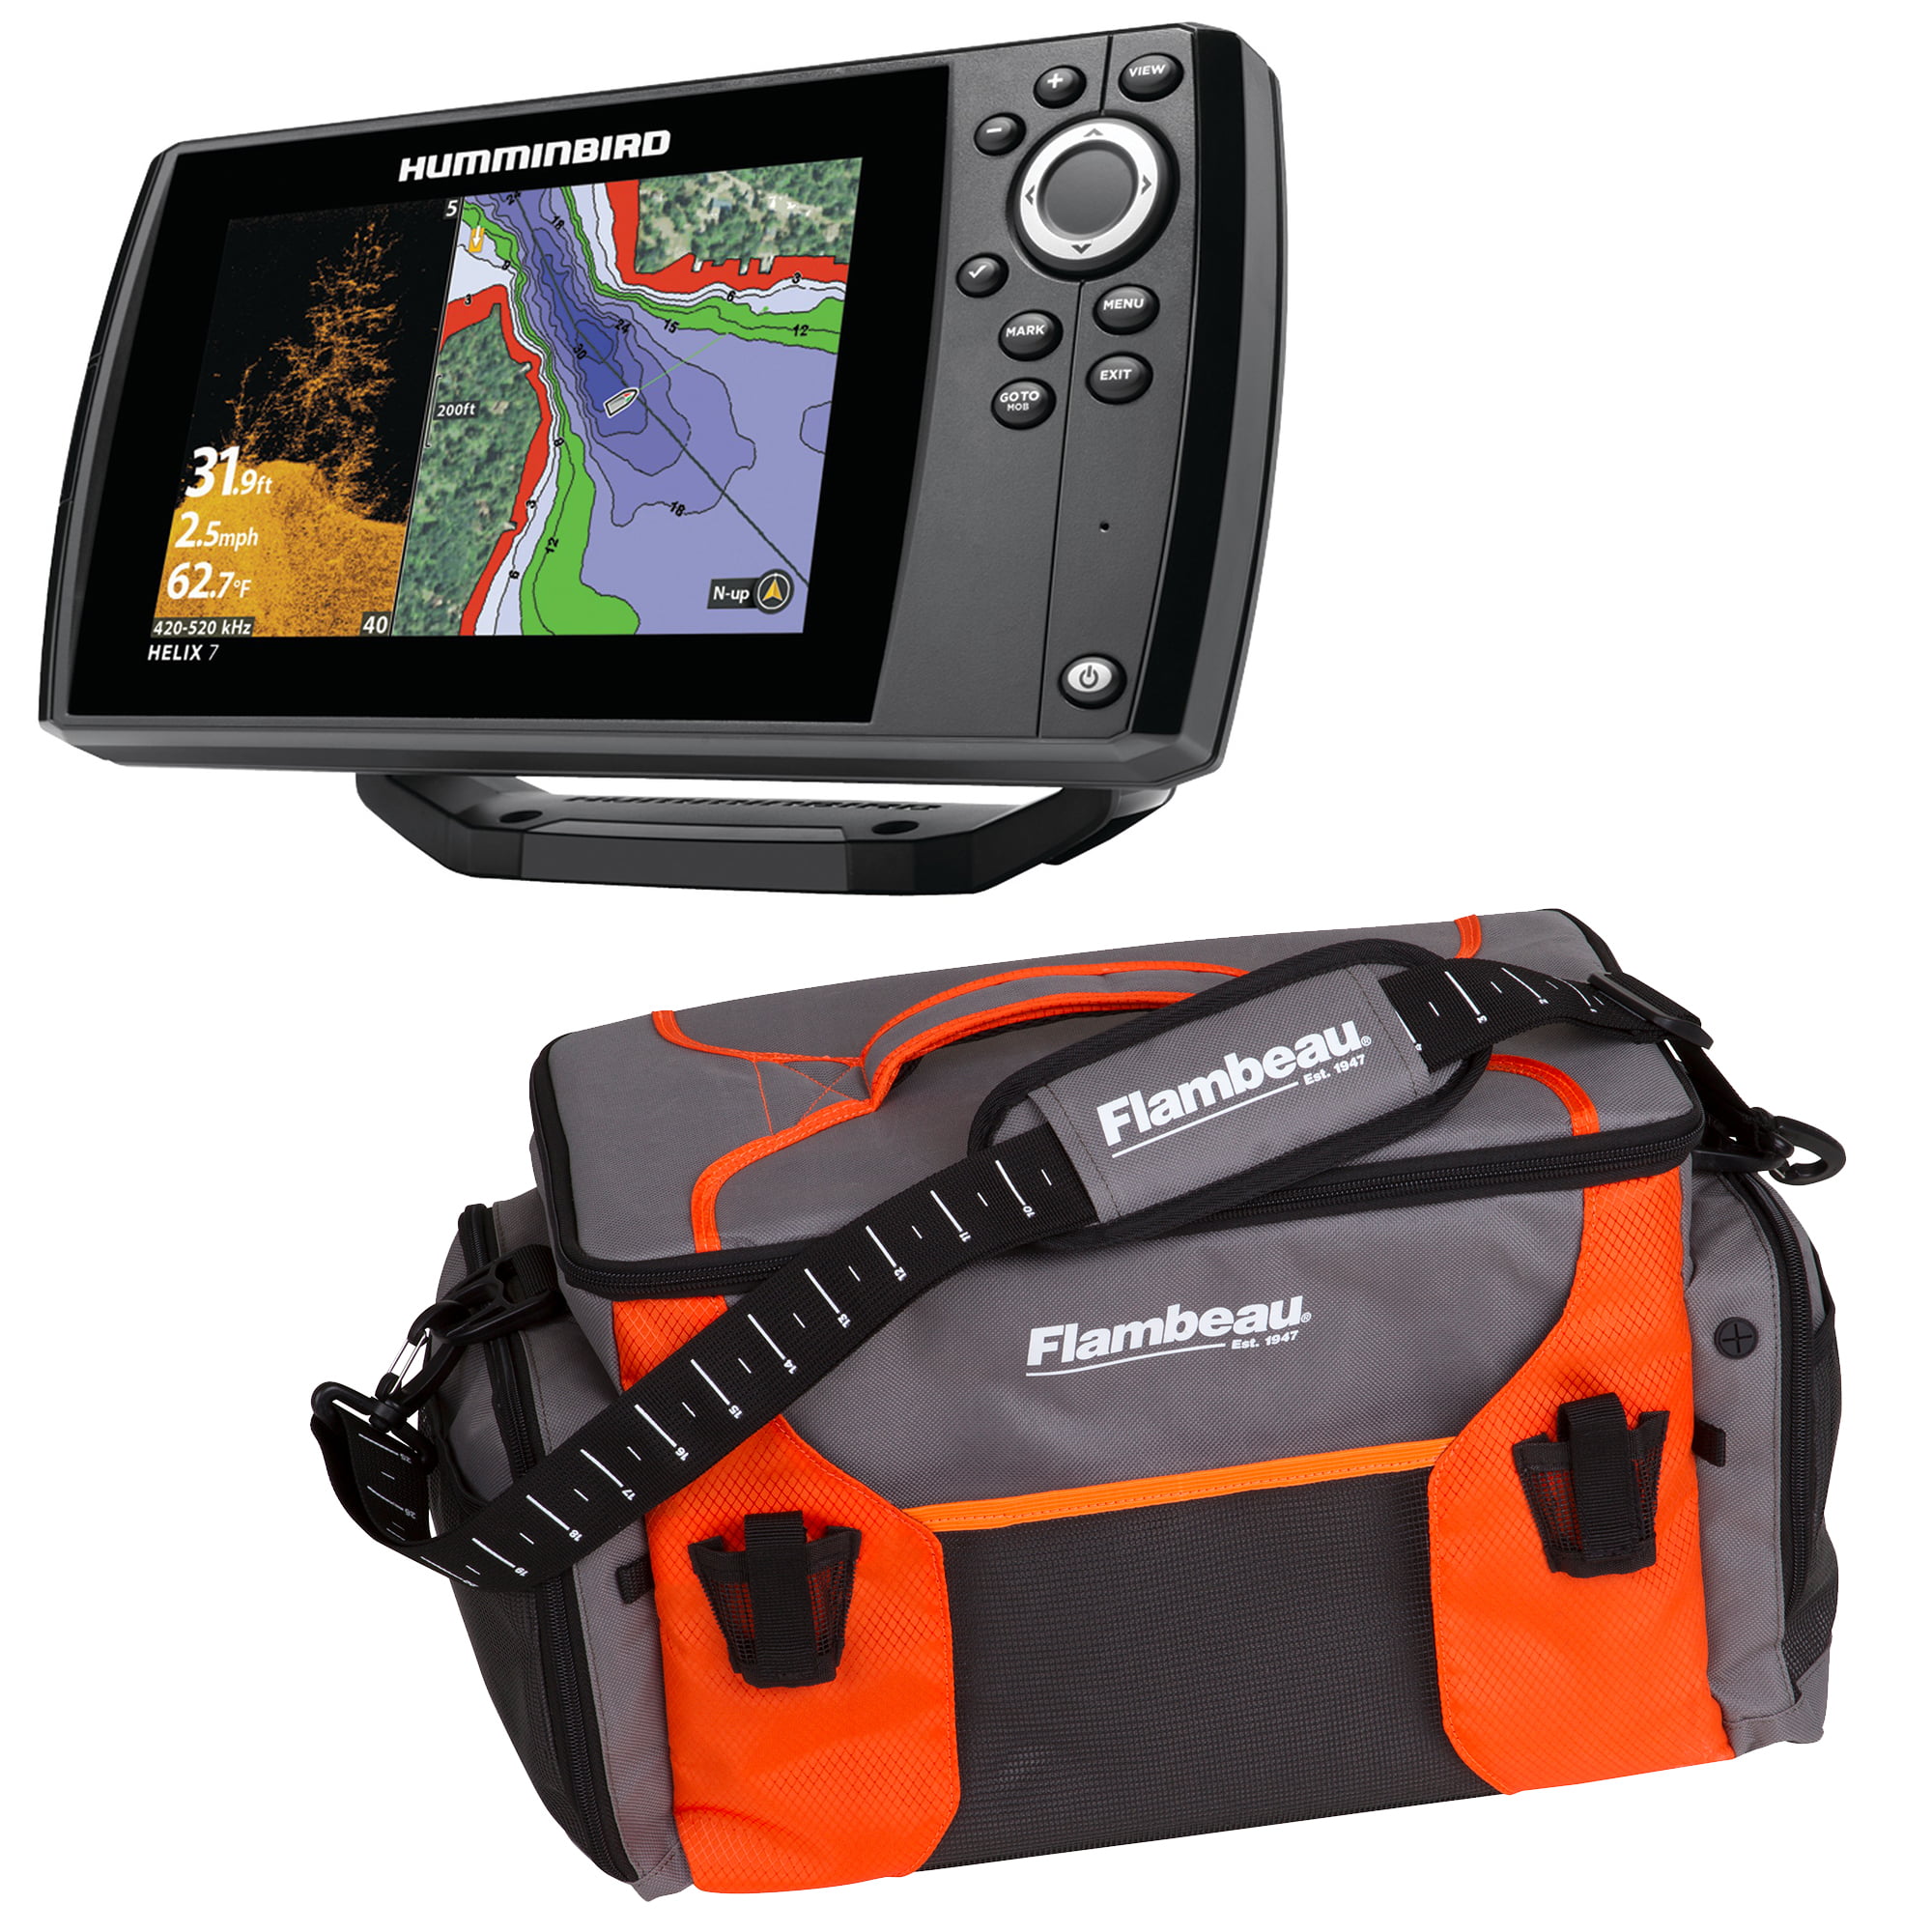 Humminbird 410300-1 HELIX 7 CHIRP DI GPS G2 Fishfinder & Flambeau R50D  Ritual Large Duffle & Tackle Bag 